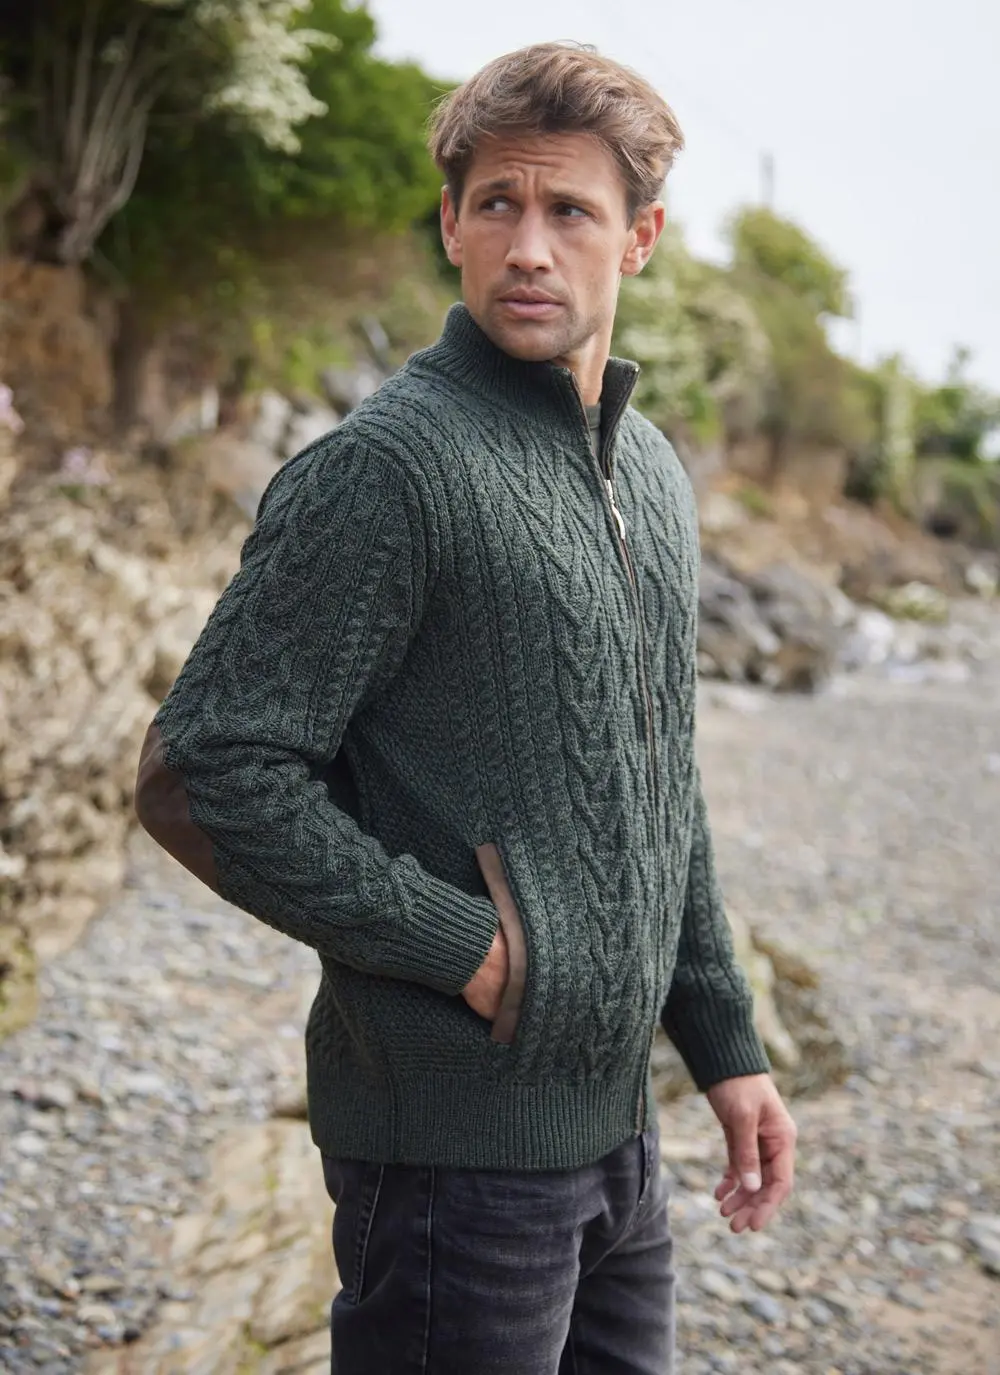 Eoin Zip Aran Cardigan in Army | Aran Sweaters for Men | Blarney